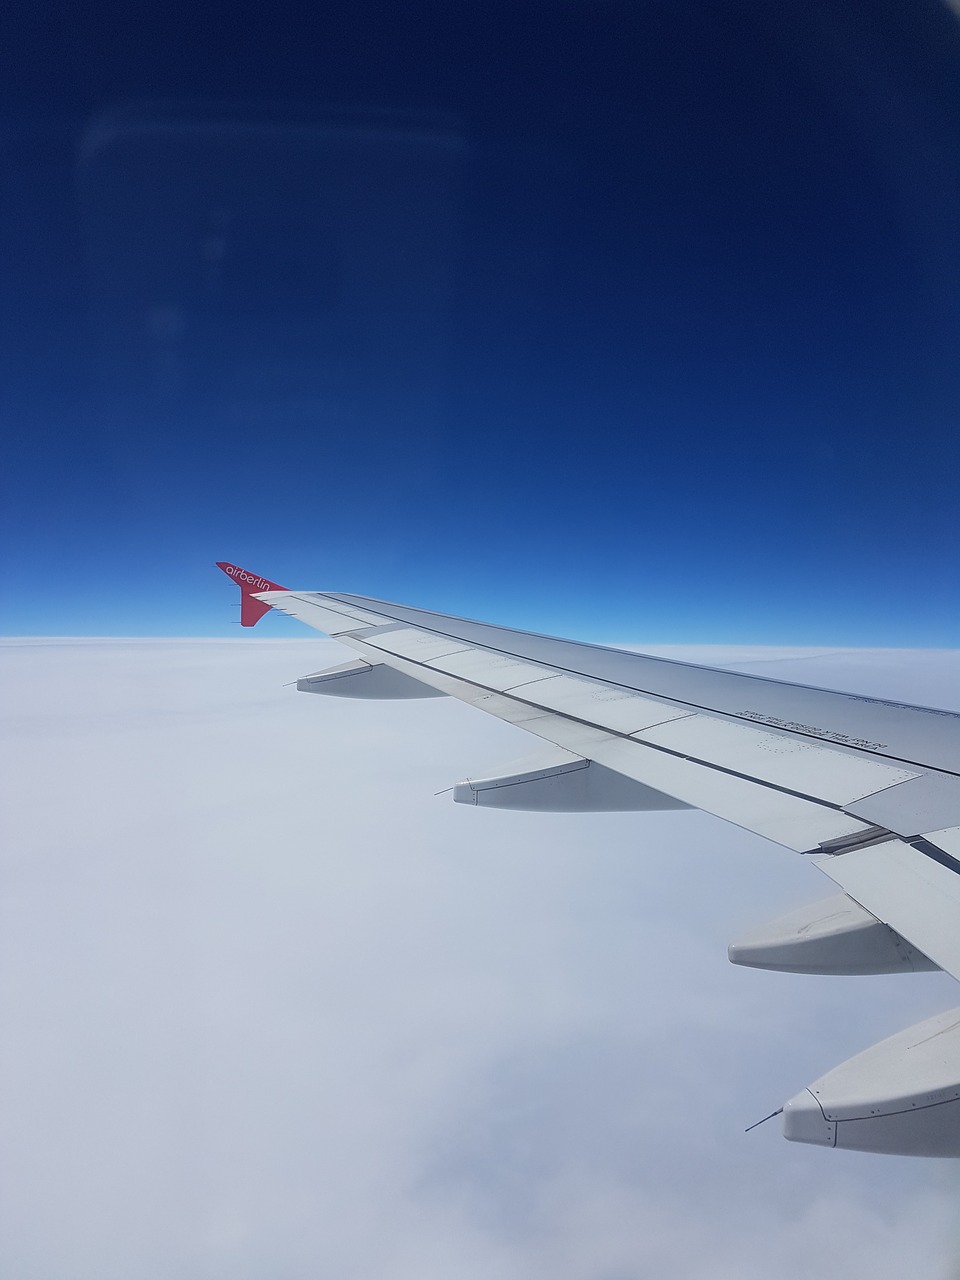 aircraft sky clouds free photo